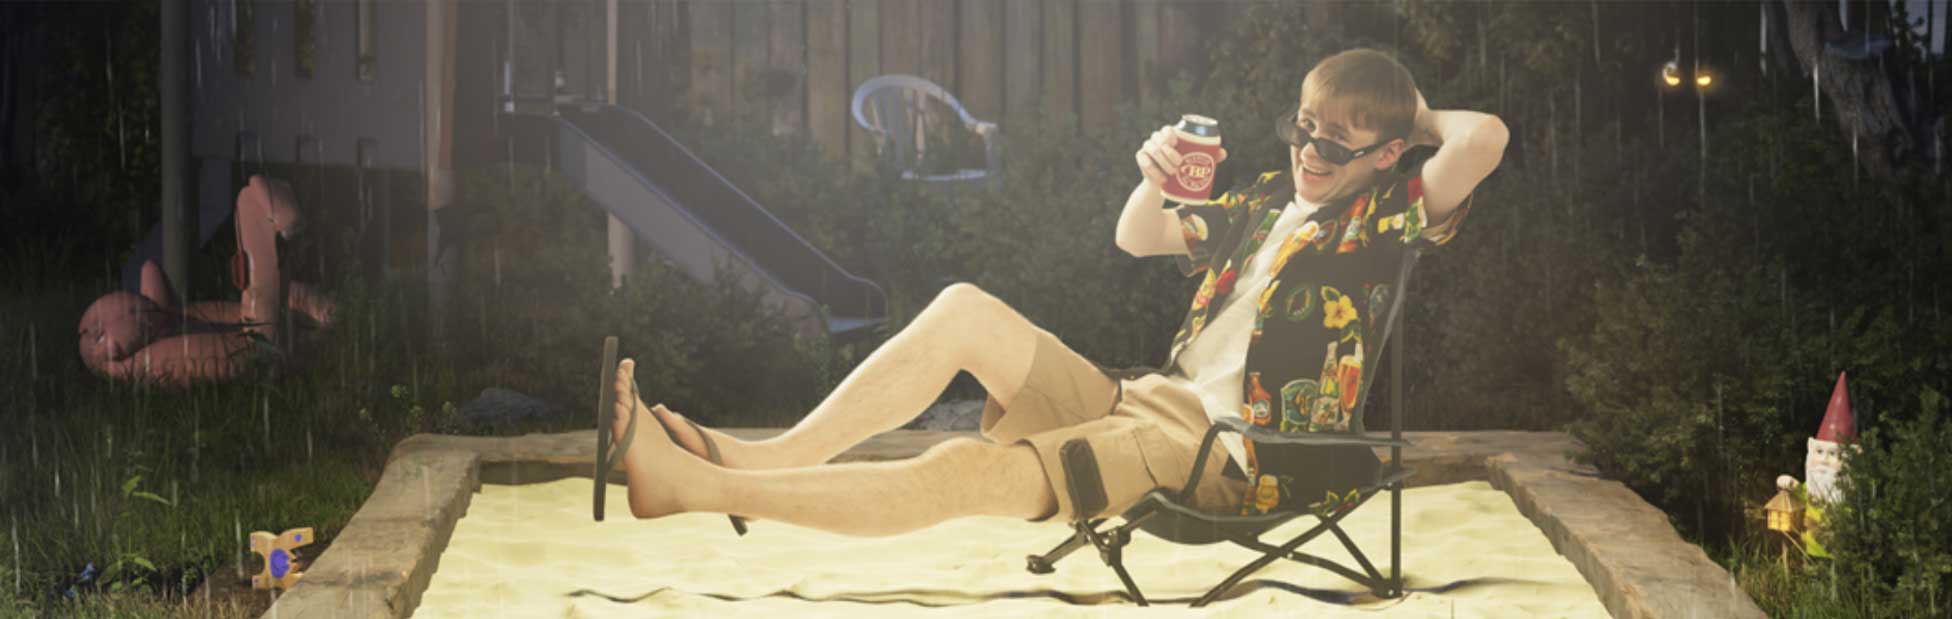 Blake Pavey drinking beer in deck chair in sandpit